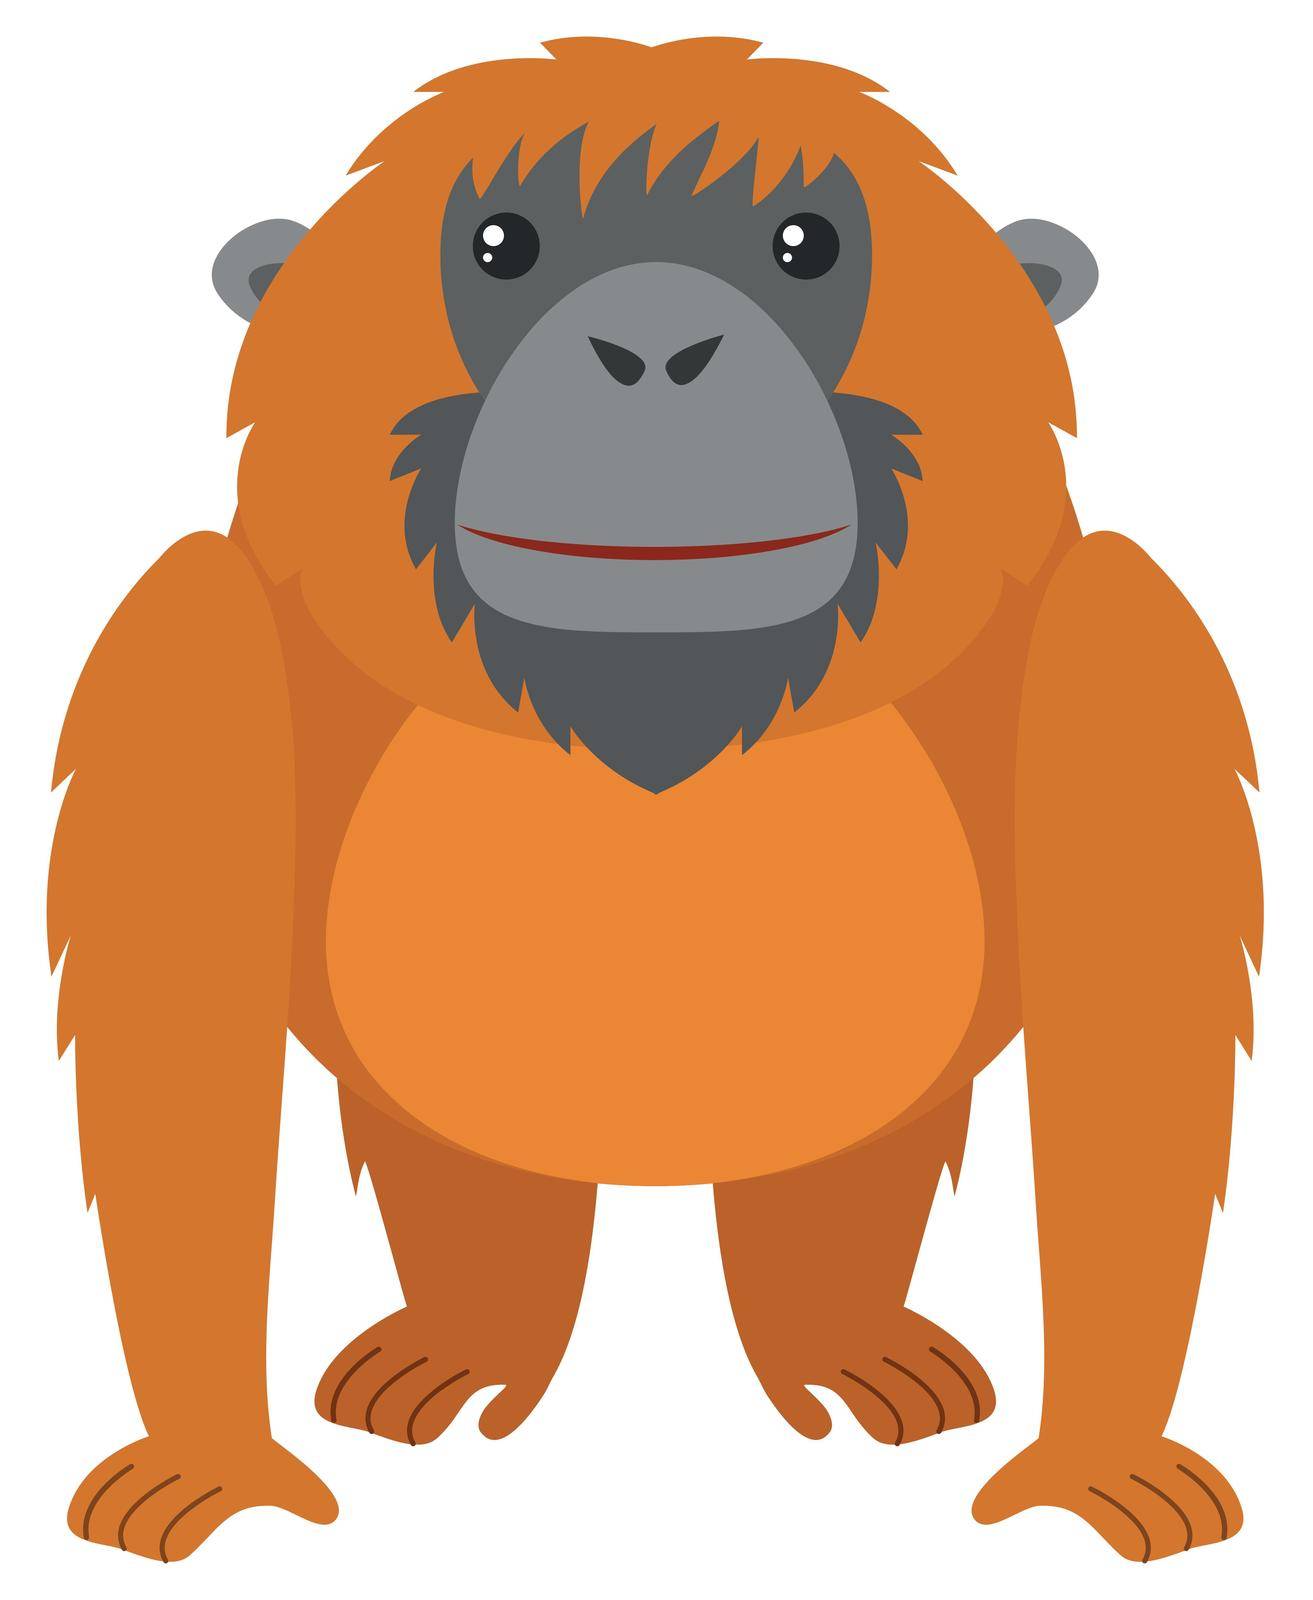 Orangutan with brown fur illustration